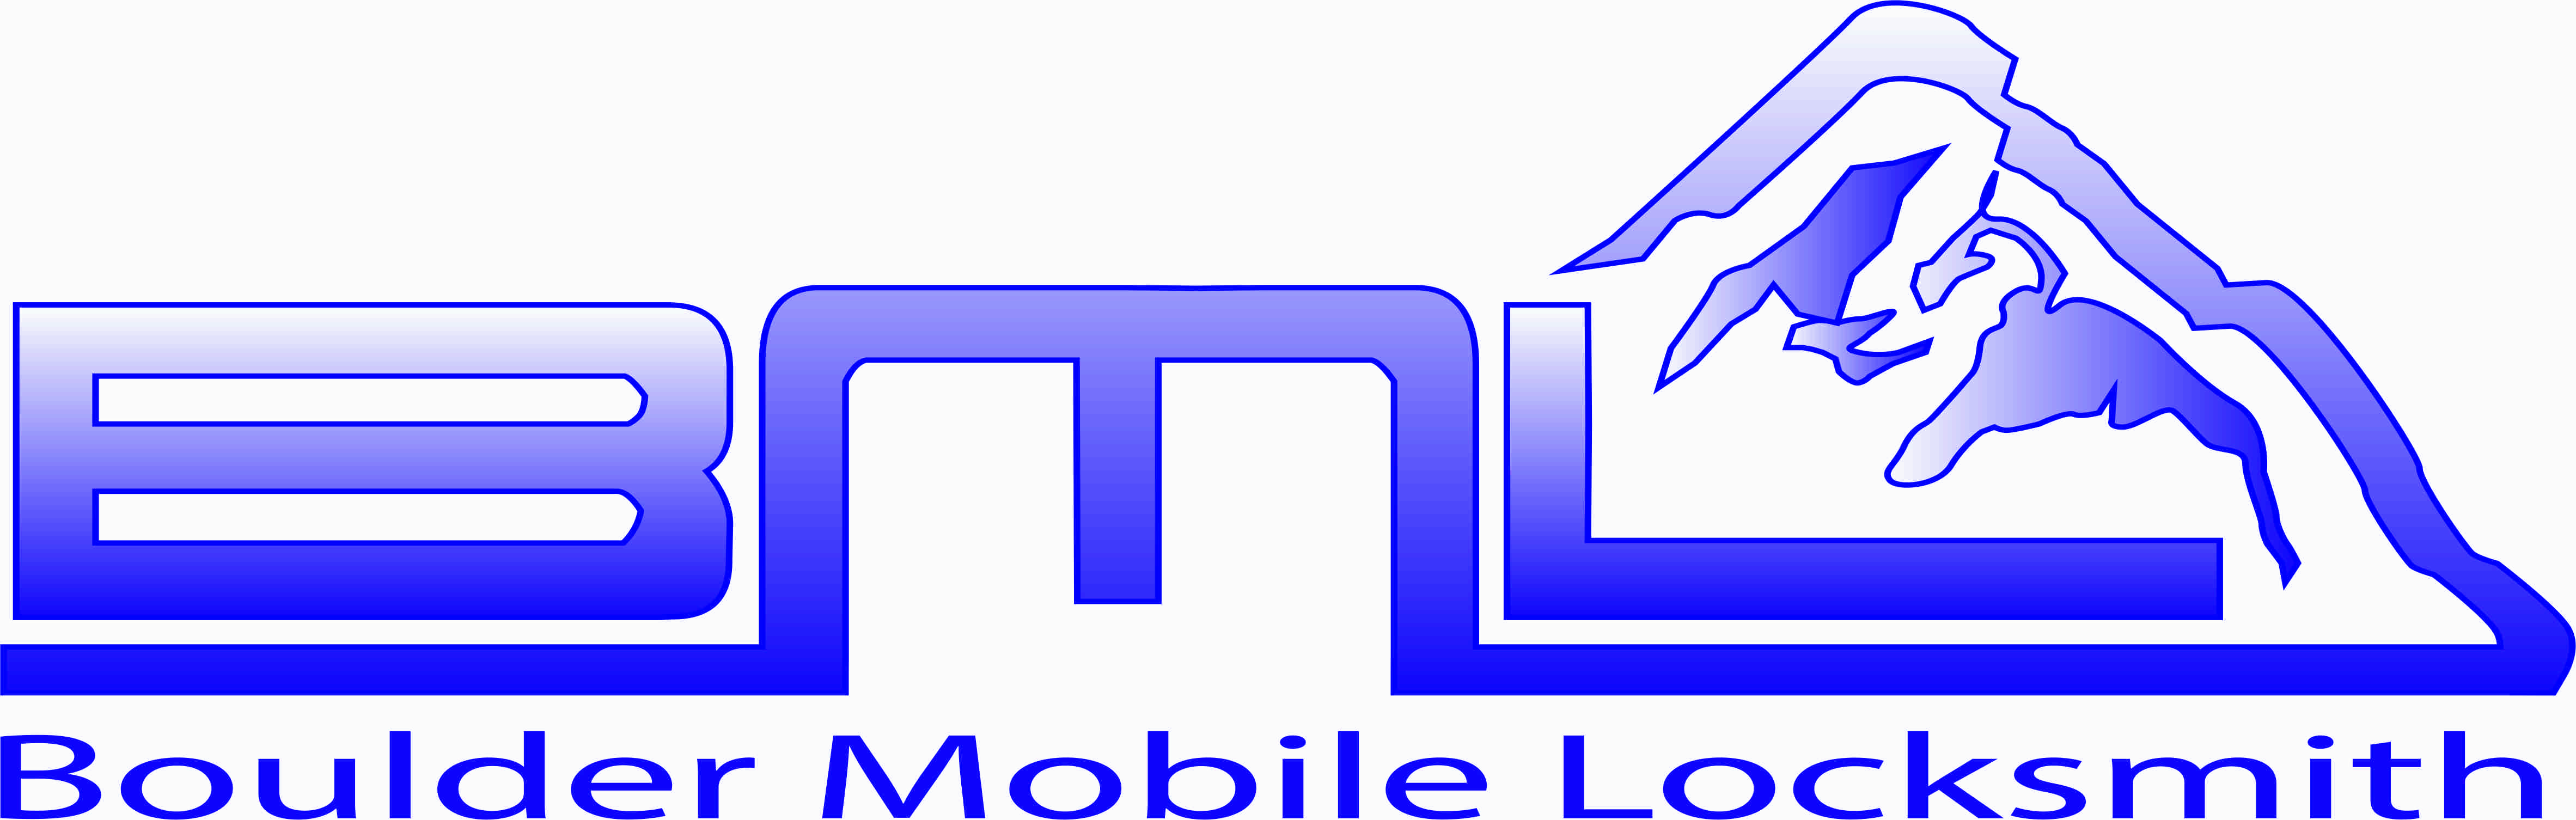 Boulder Mobile Locksmiths Logo